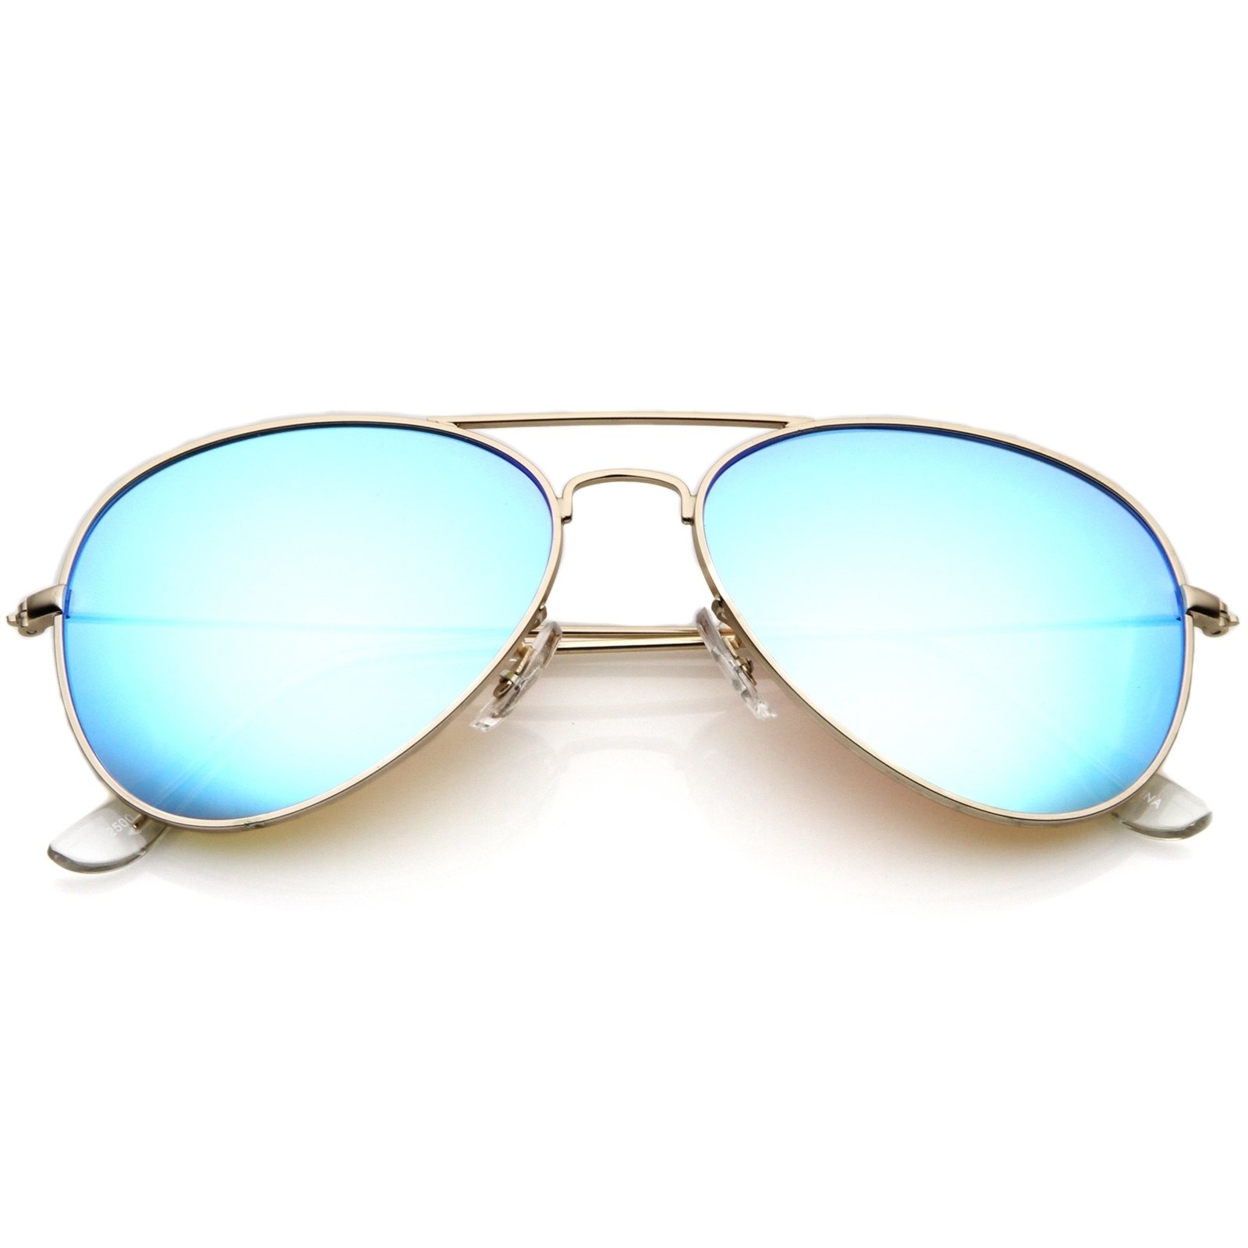 Premium Nickel Plated Frame Multi-Coated Mirror Lens Aviator Sunglasses 59mm - Gold / Red Mirror